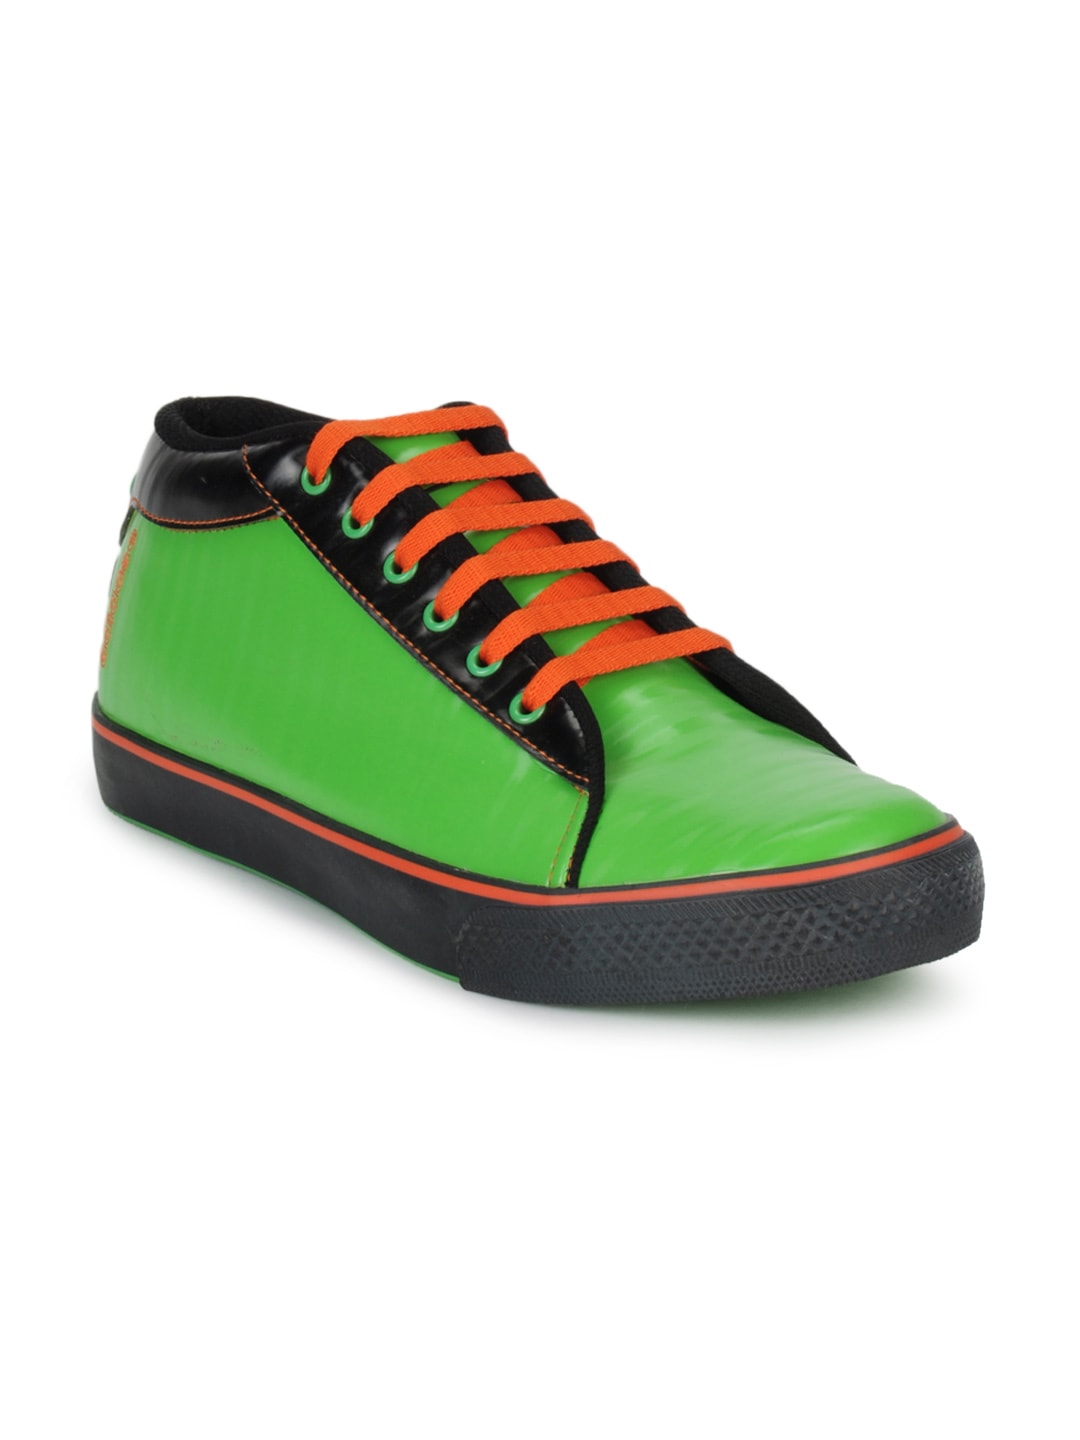 ADIDAS Men Green Lucent Shoes